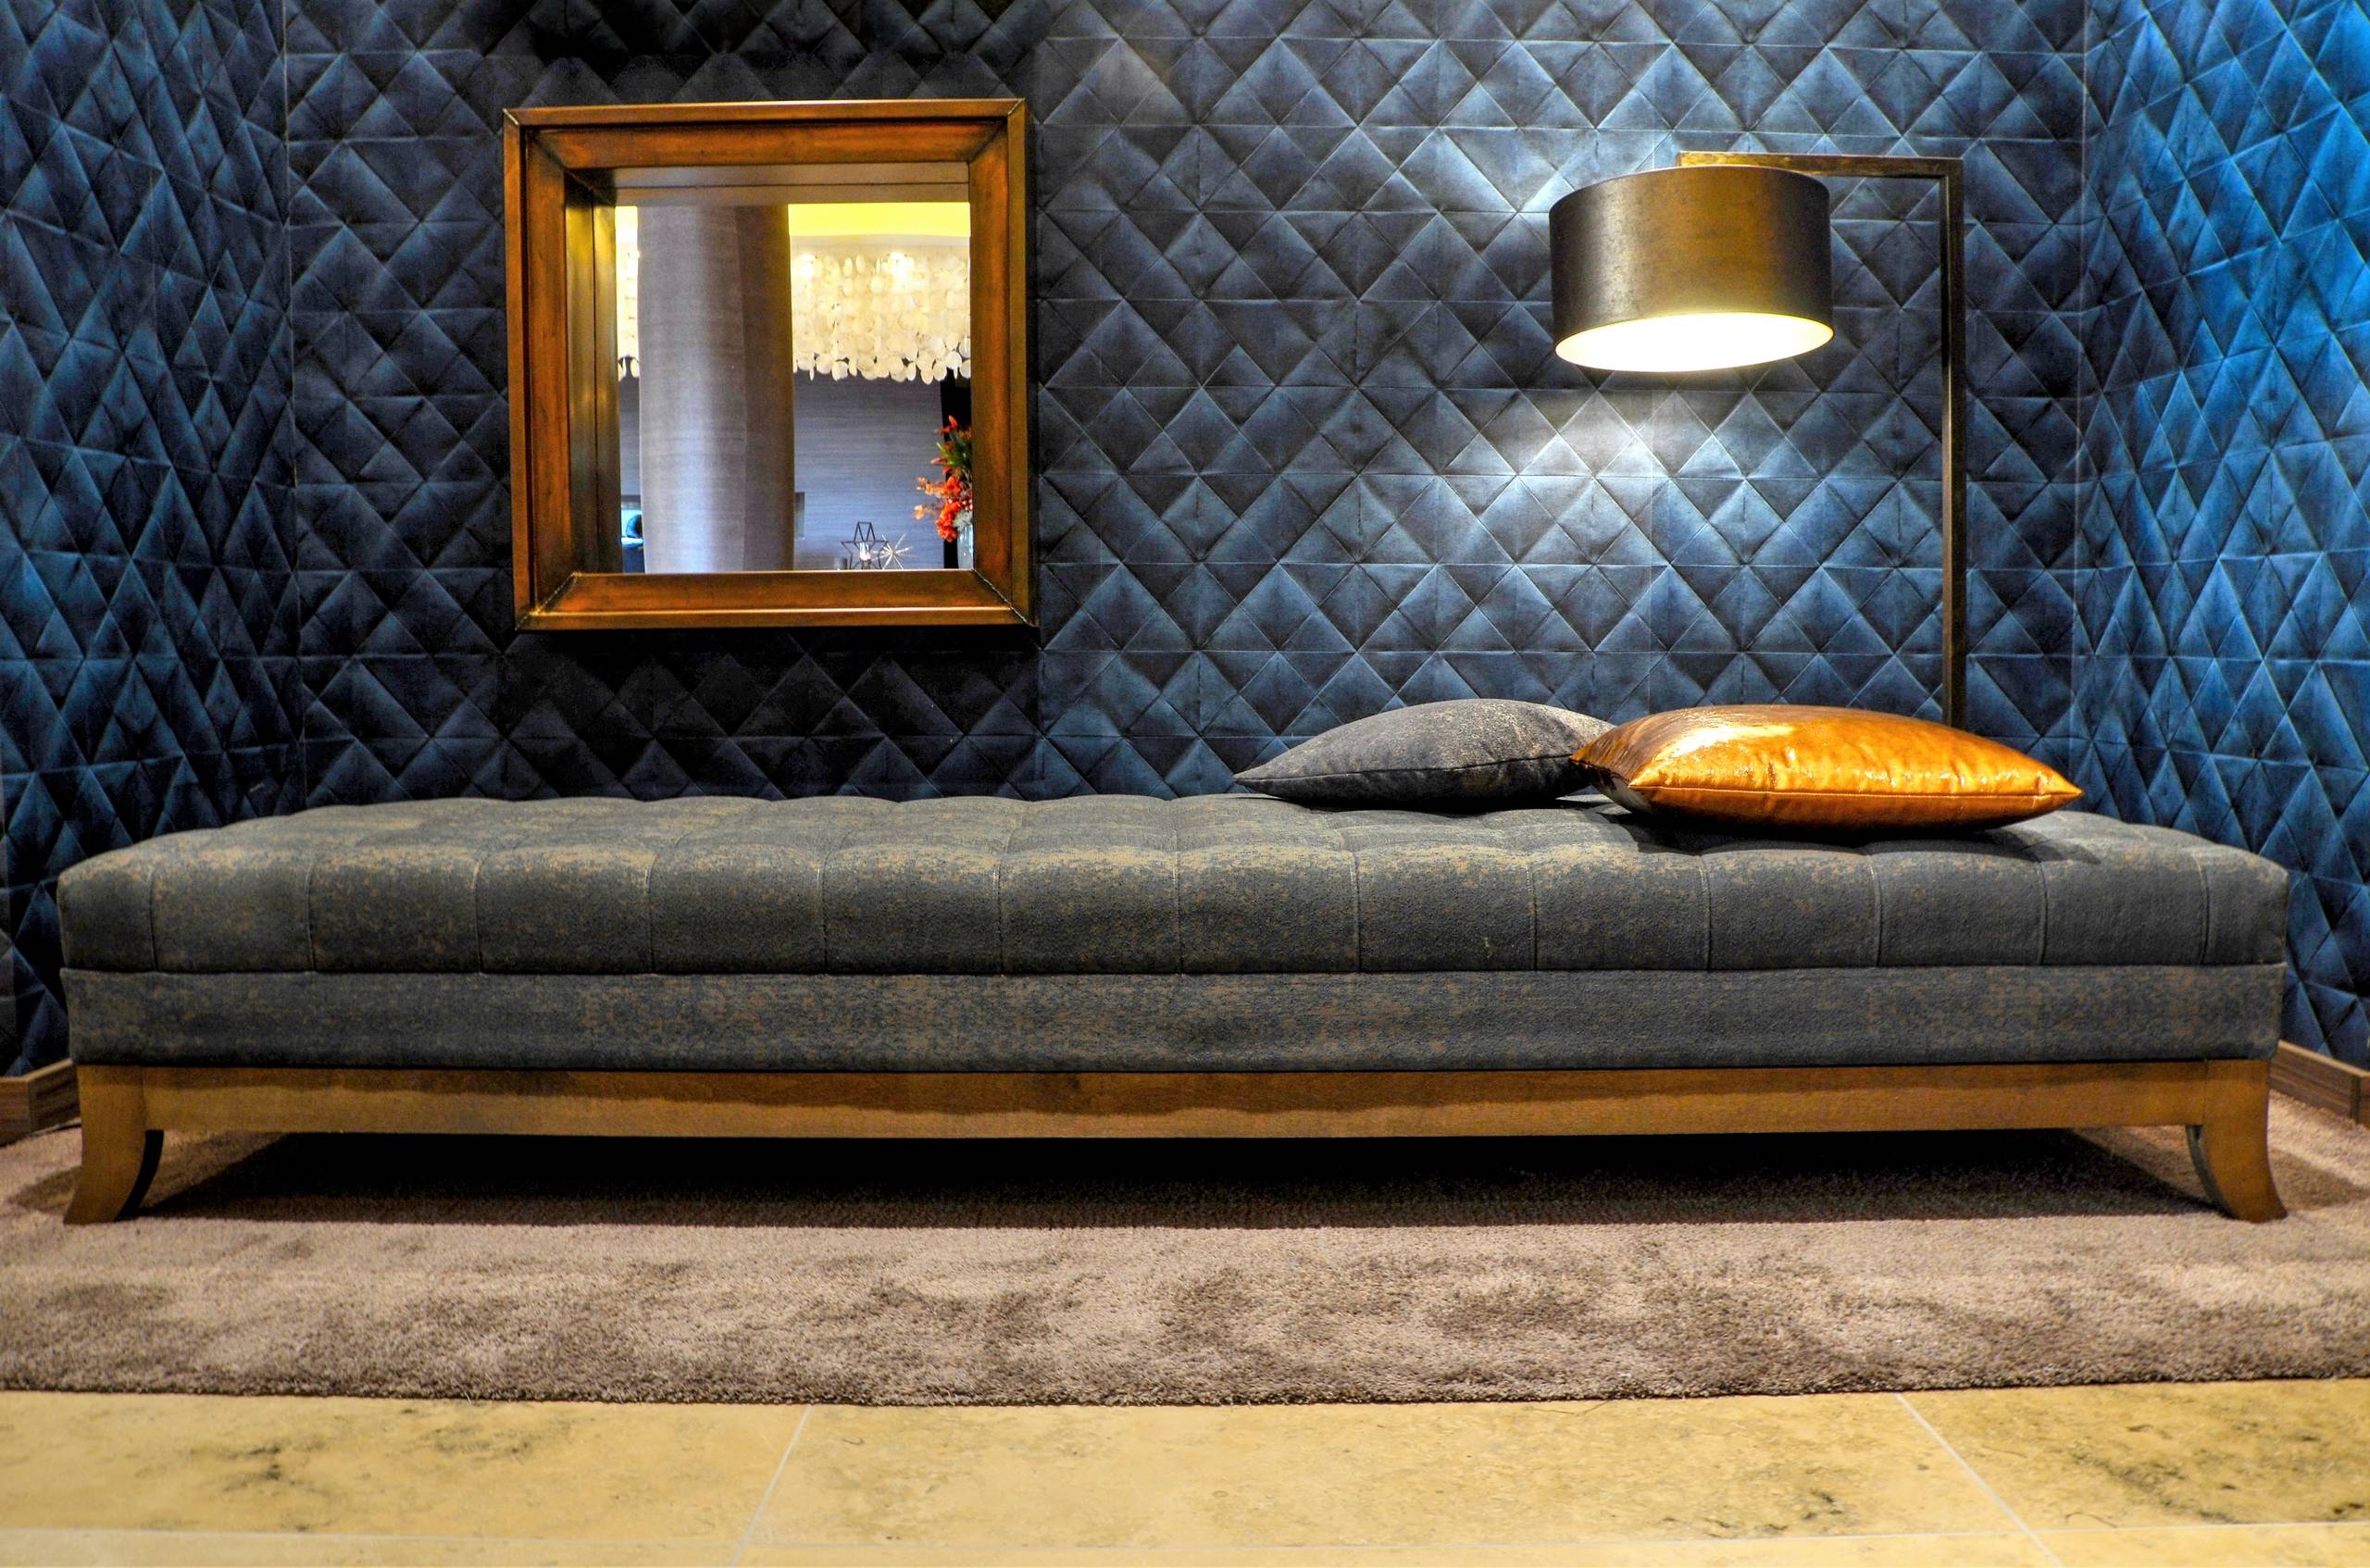 Limpieza de alfombras - Contemporary - Living Room - Barcelona - by F.Papiol  | Houzz